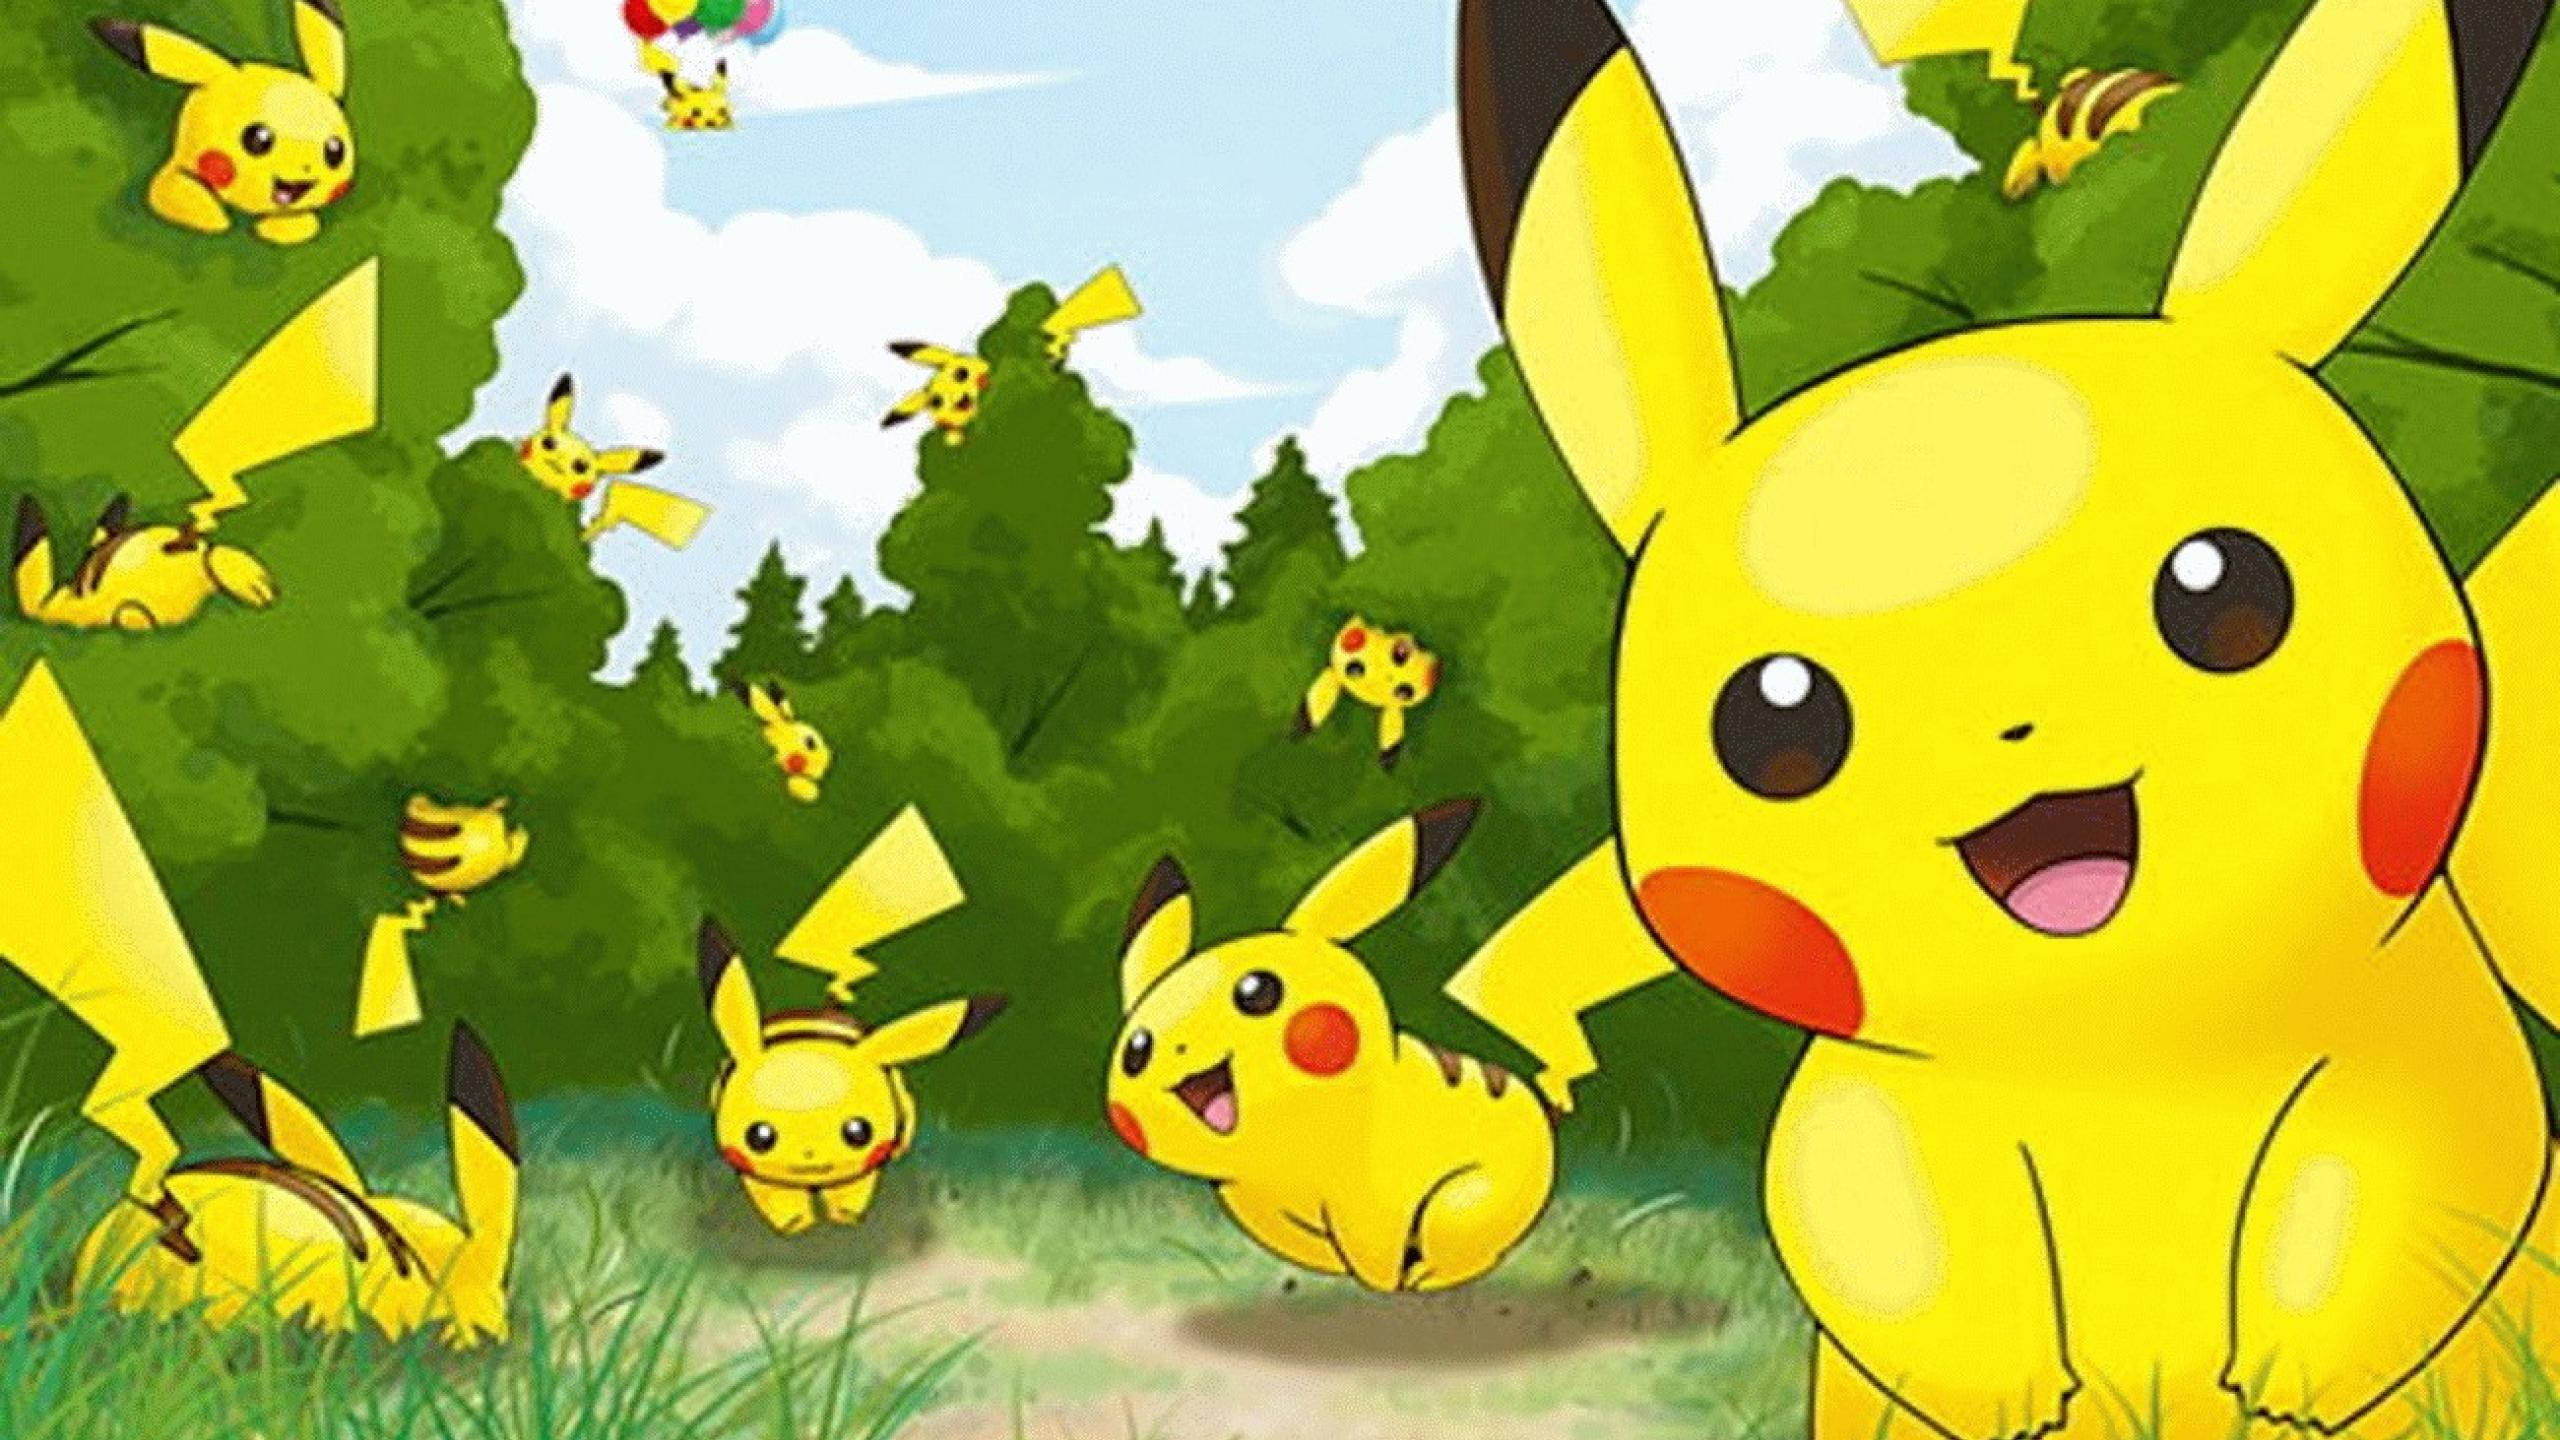 Pikachu Clones Play Background